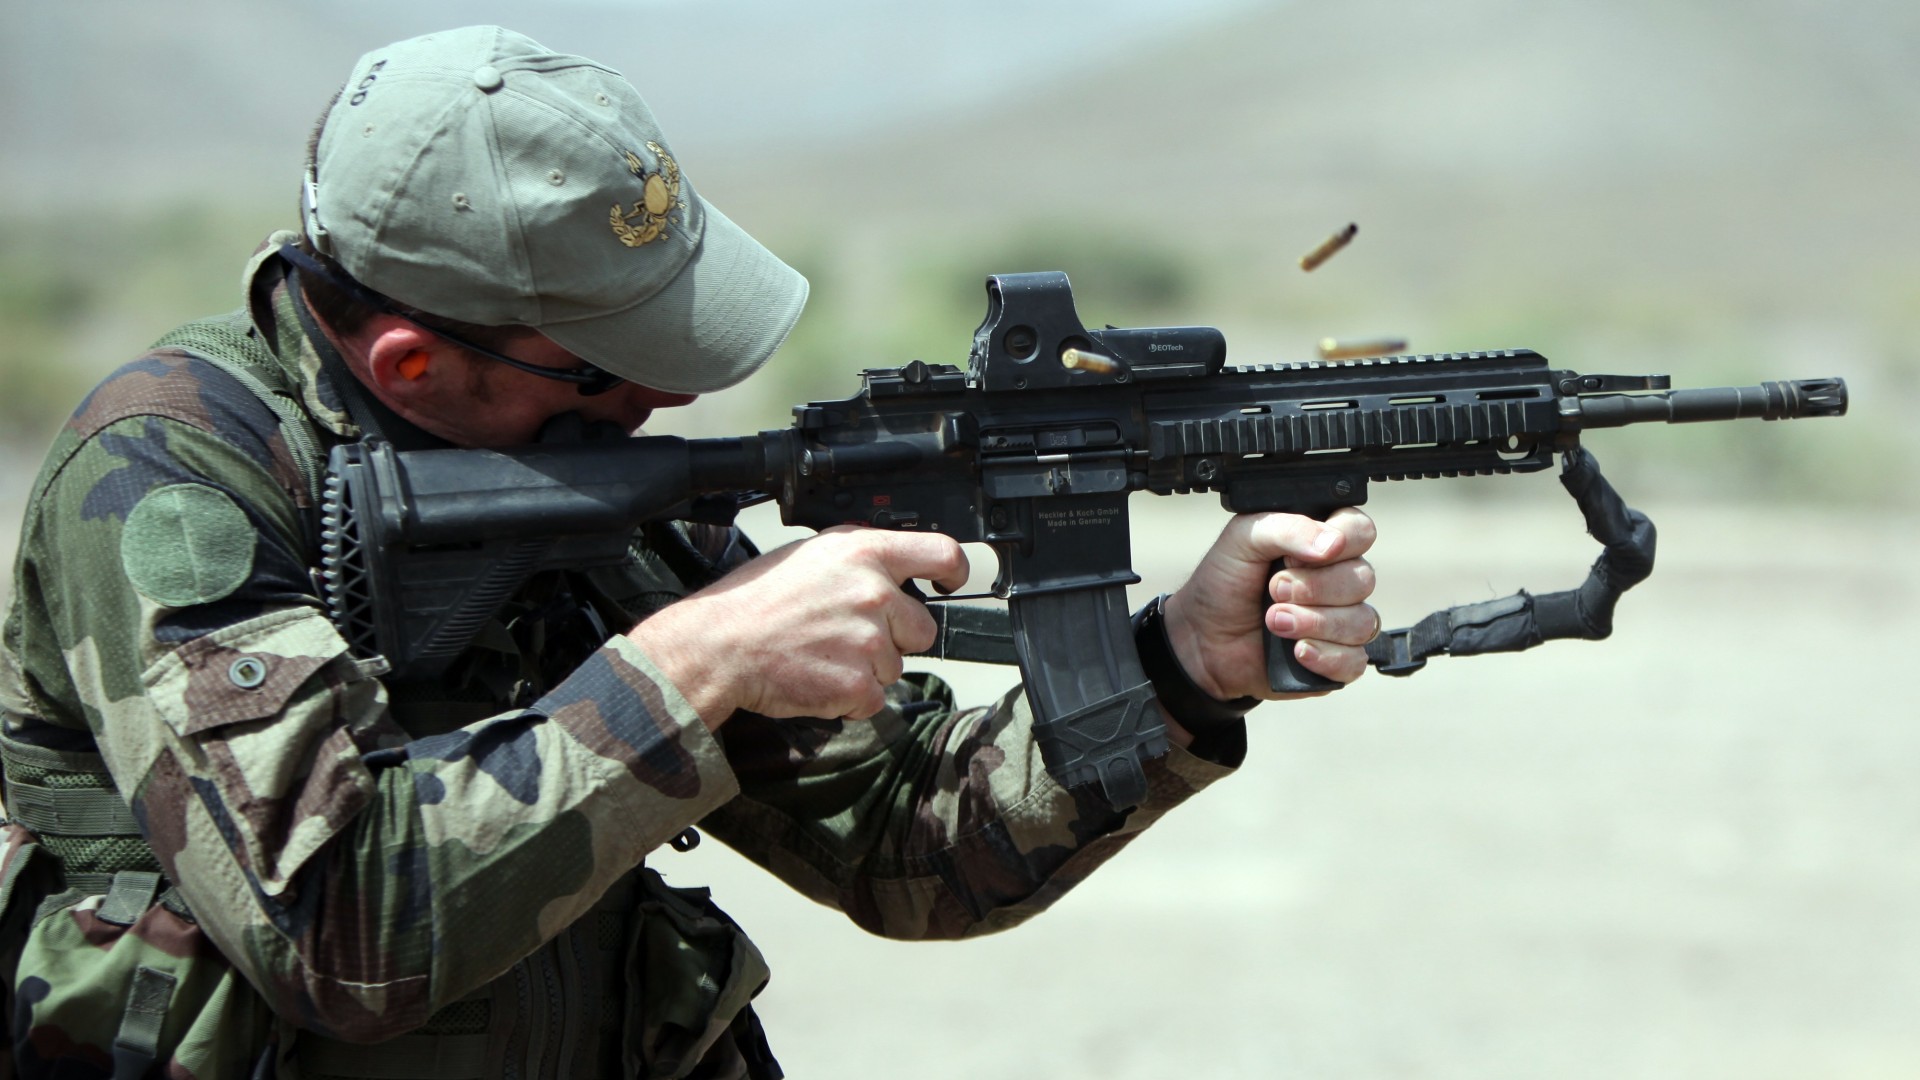 HK416, soldier, Heckler & Koch, assault rifle, firing, camo, in action (horizontal)